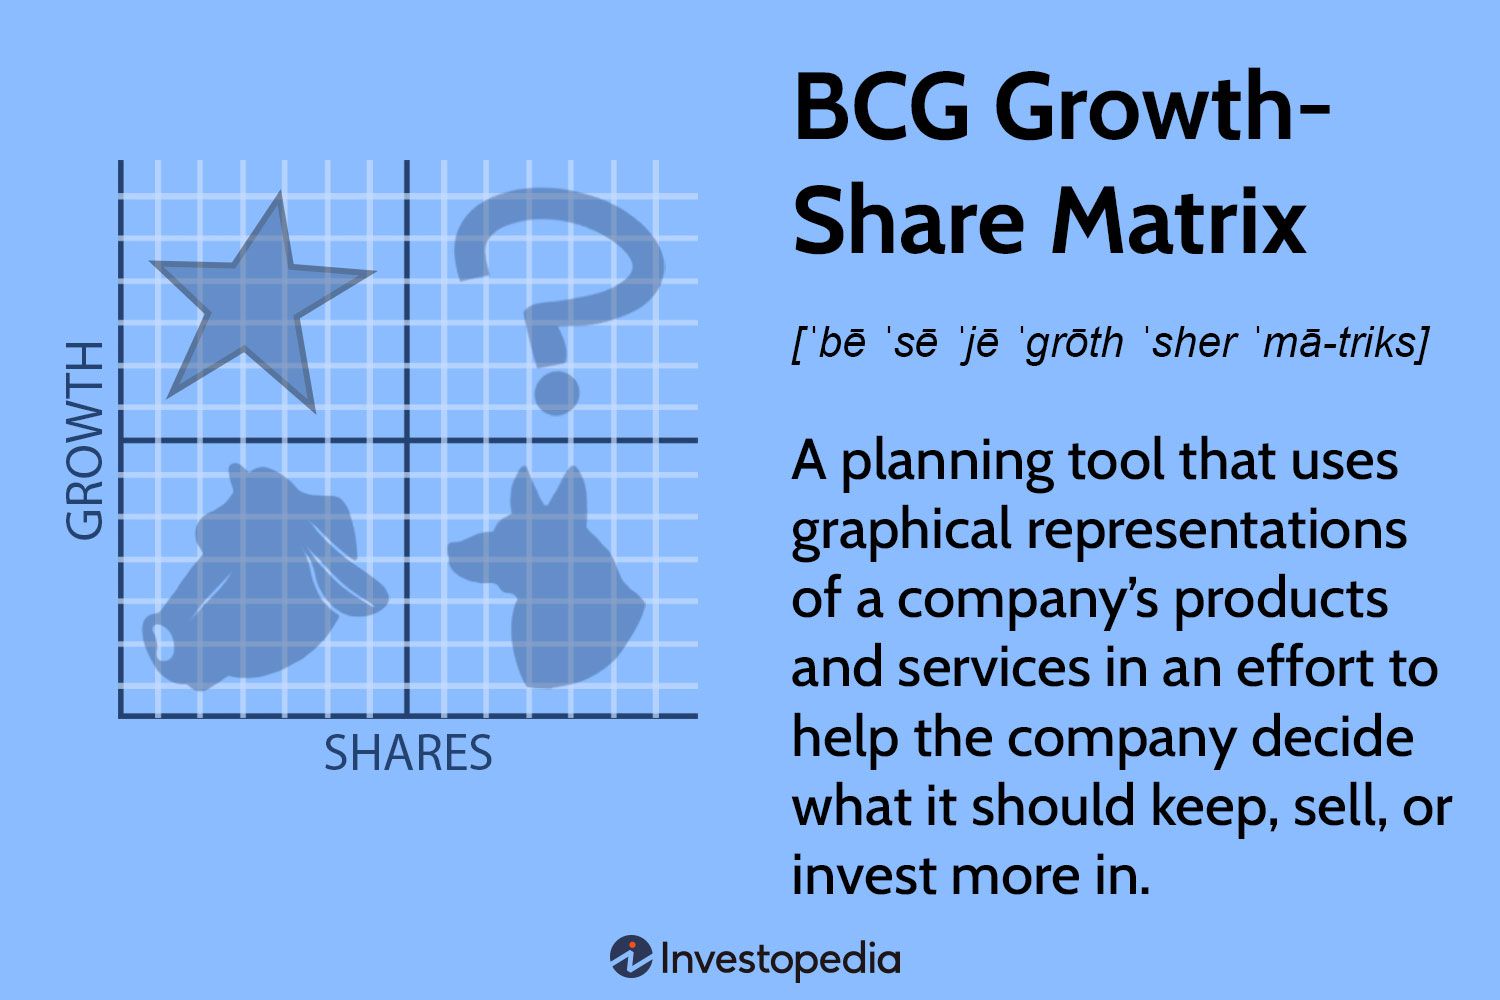 BCG Growth-Share Matrix